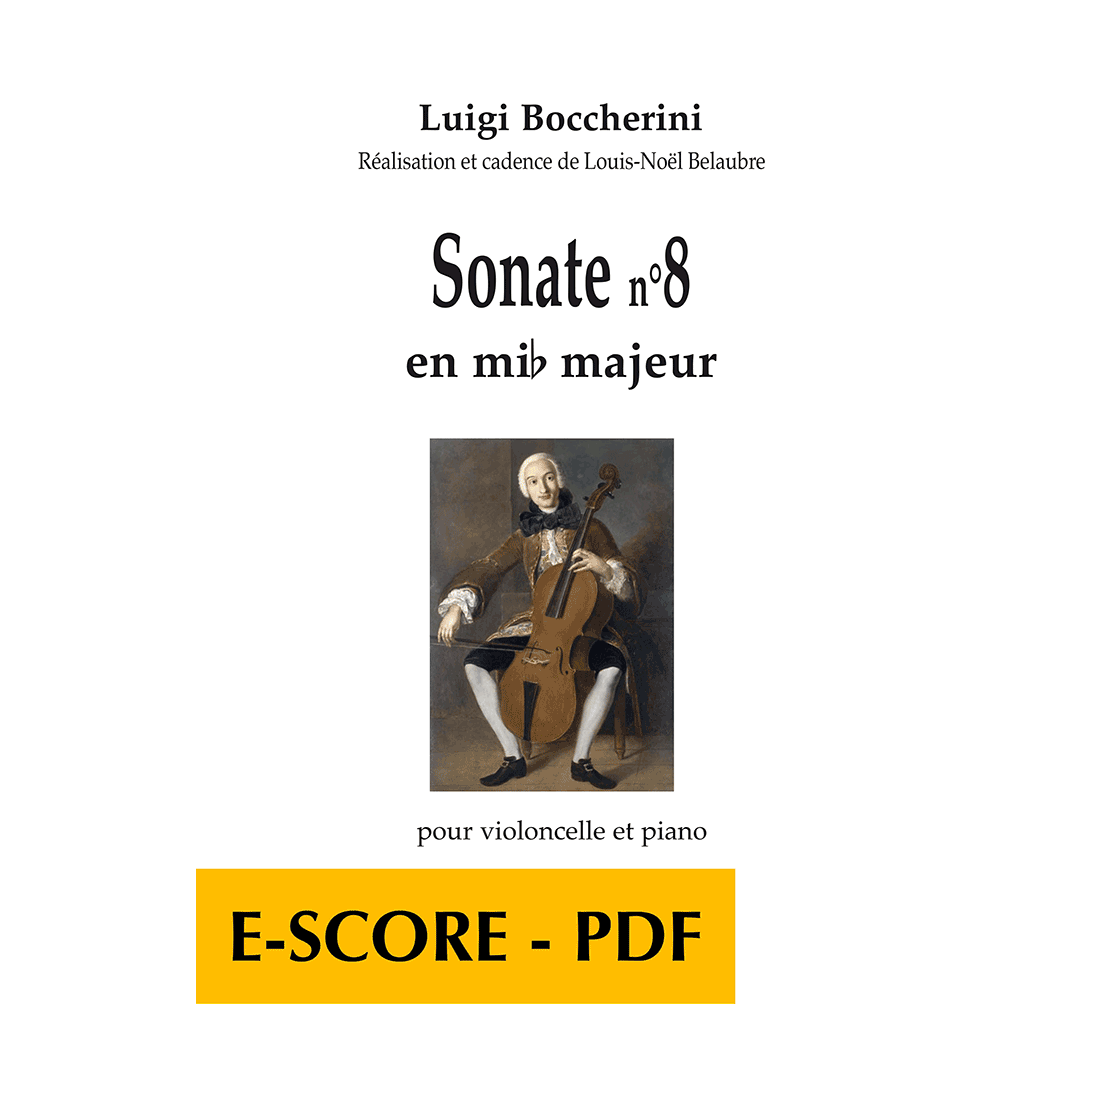 Sonate n°8 en mib majeur für Violoncello und Klavier - E-score PDF